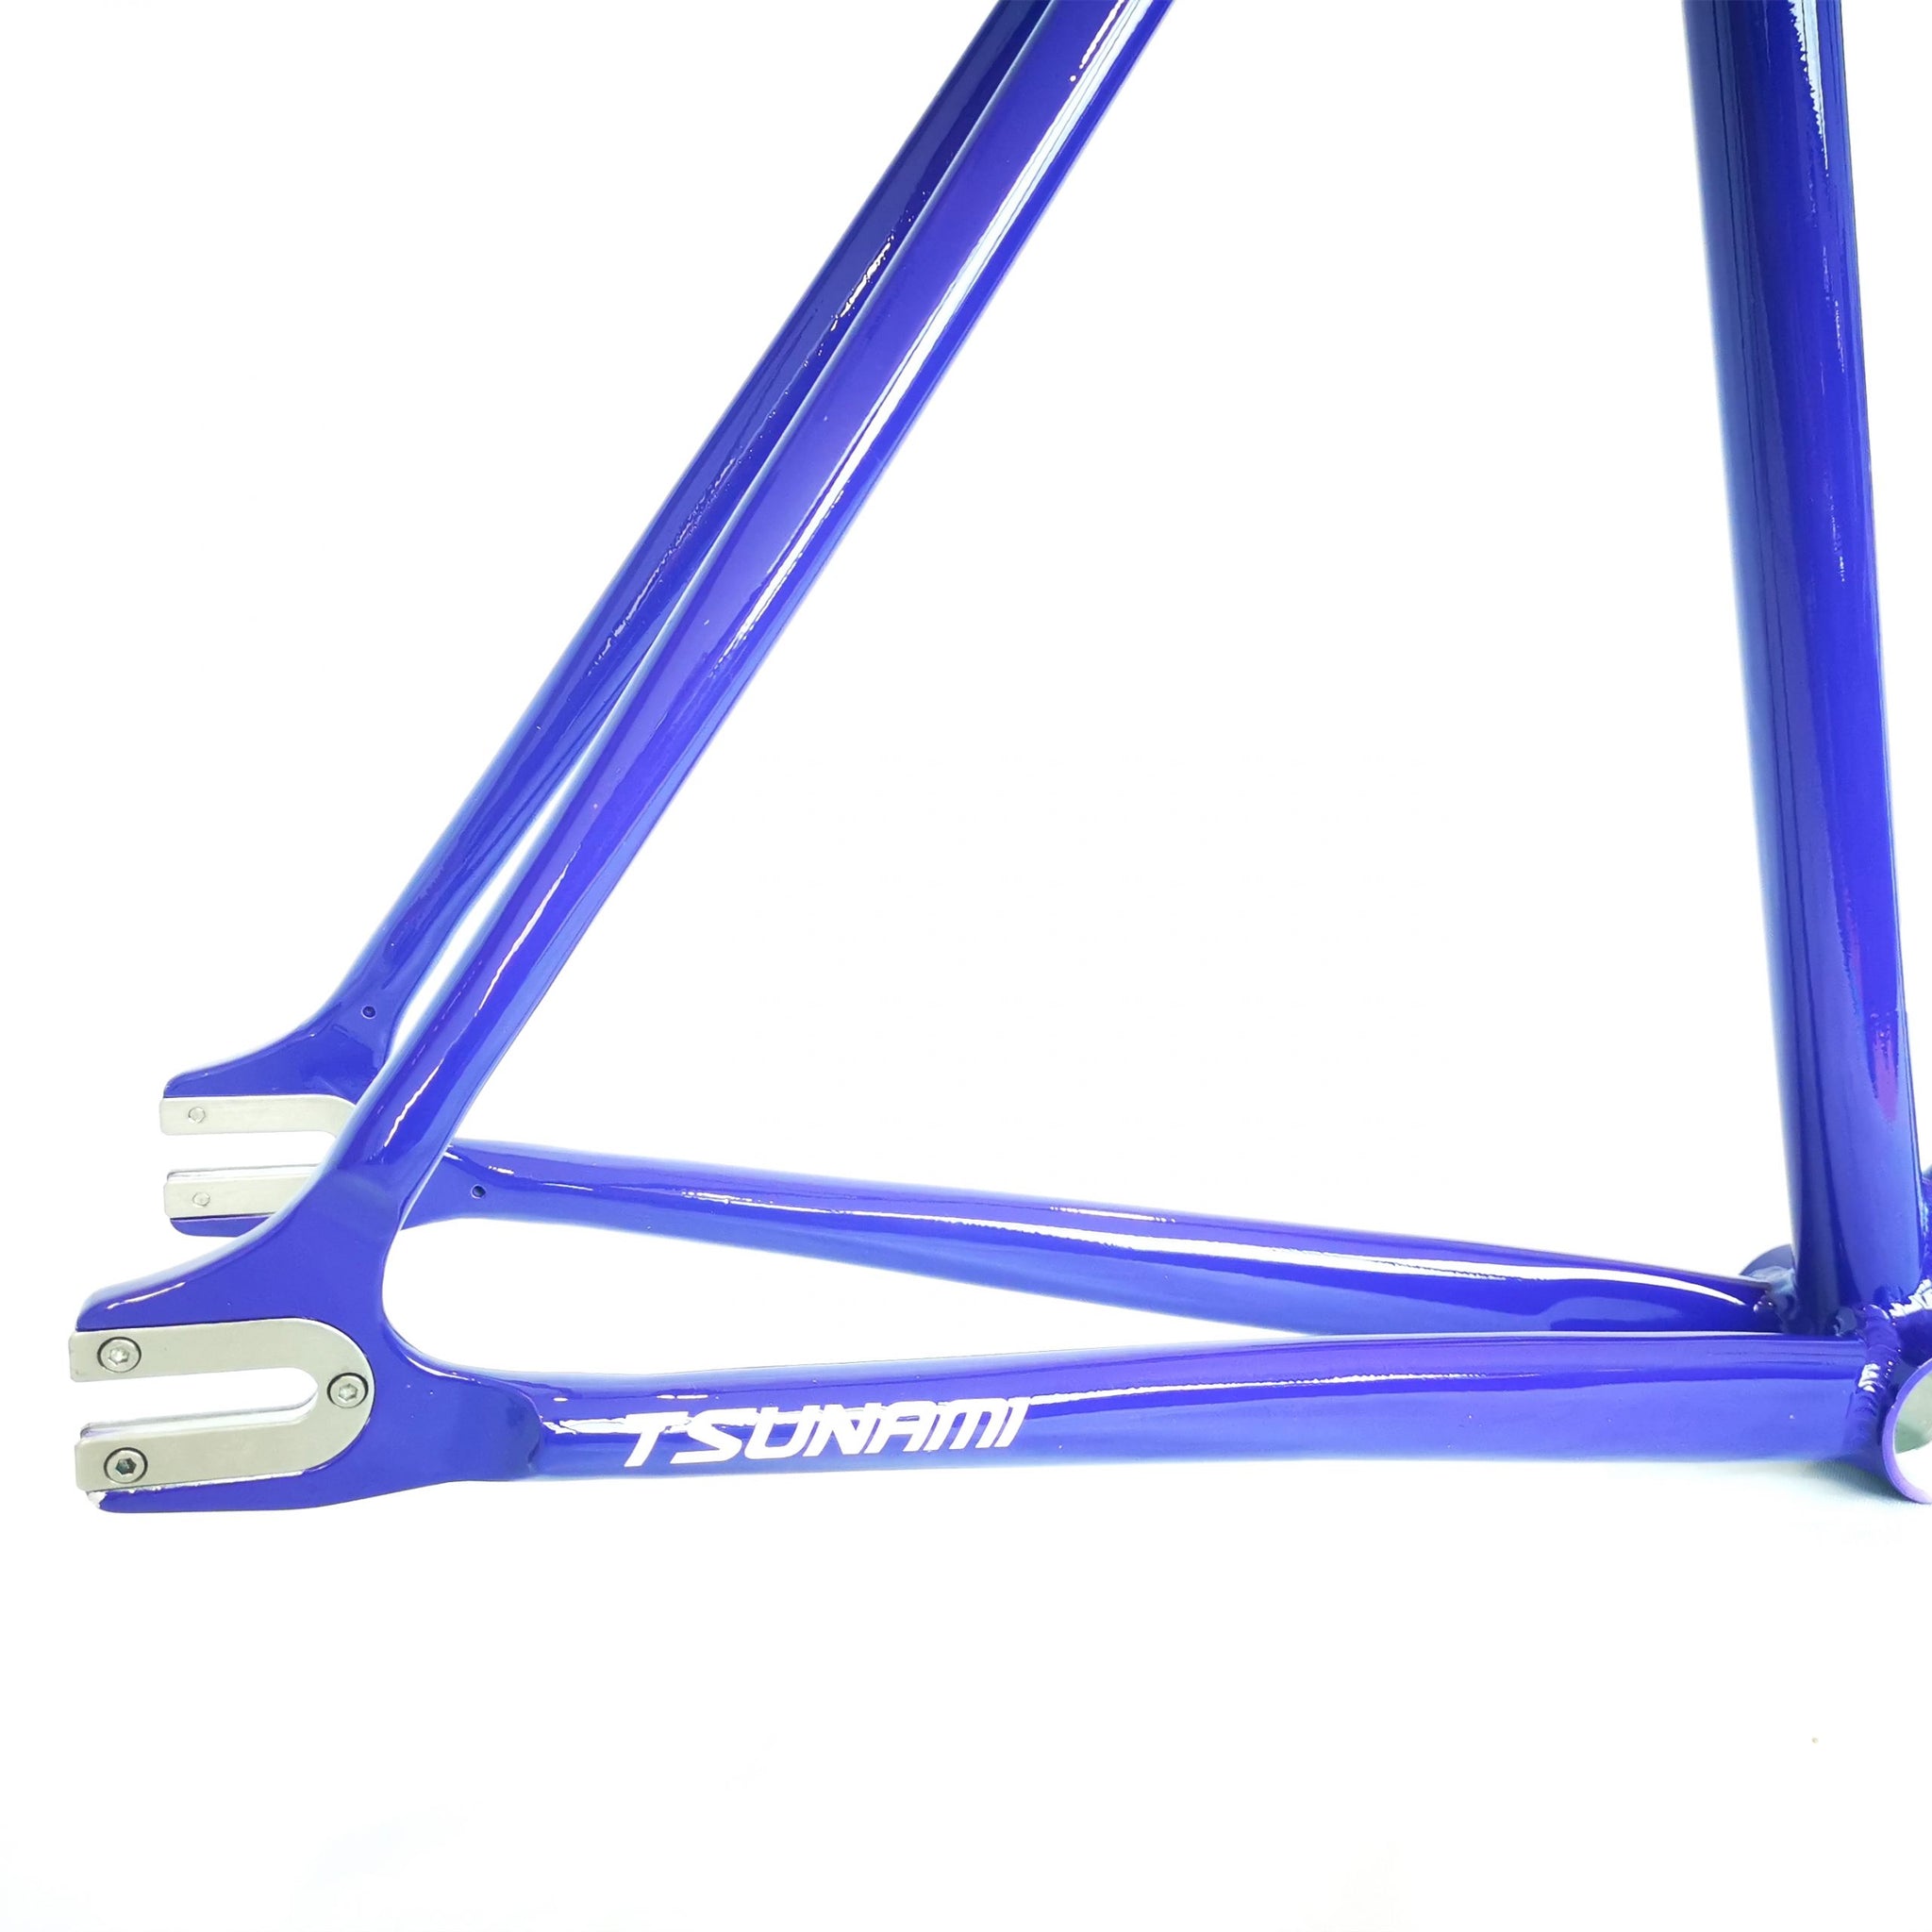 Tsunami SNM100 2021 Purple Bicycle Frames 399.00 Atelier Olympia